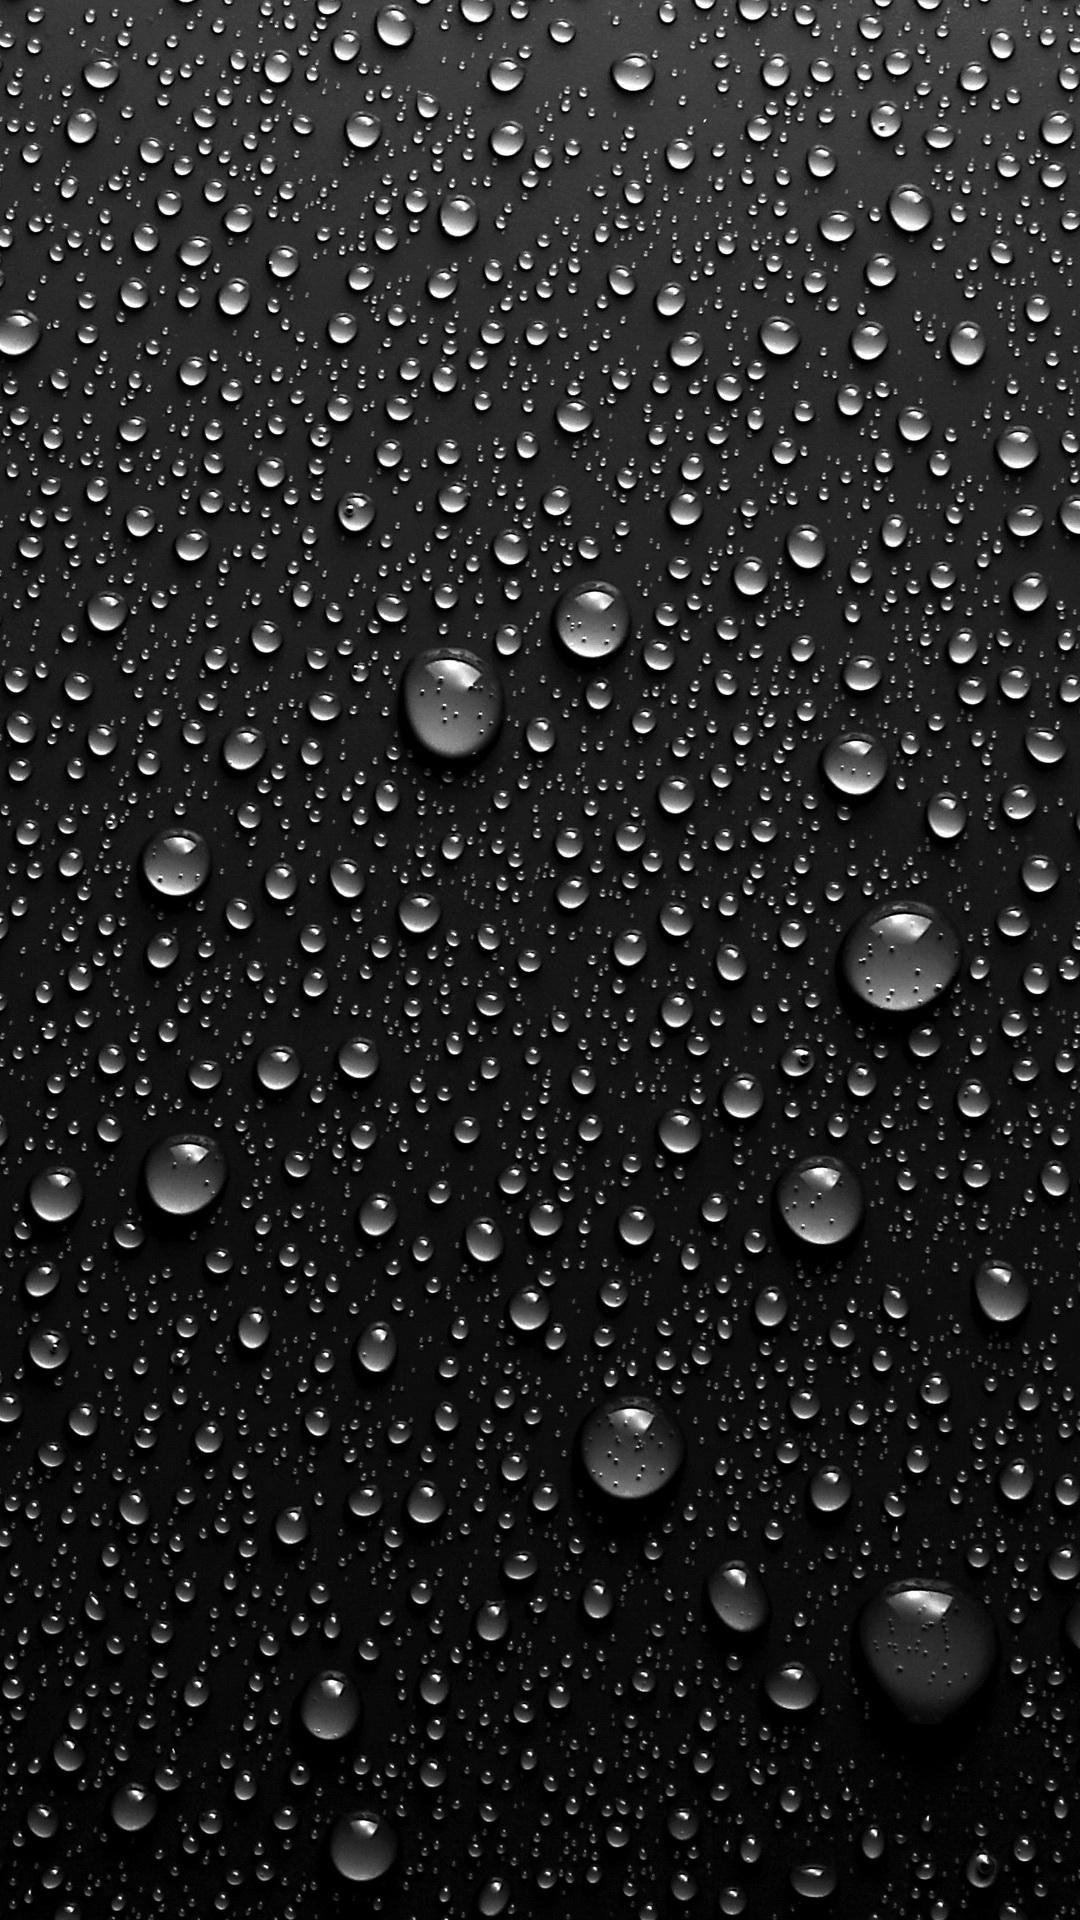 iPhone Water Drop Wallpapers - Wallpaper Cave